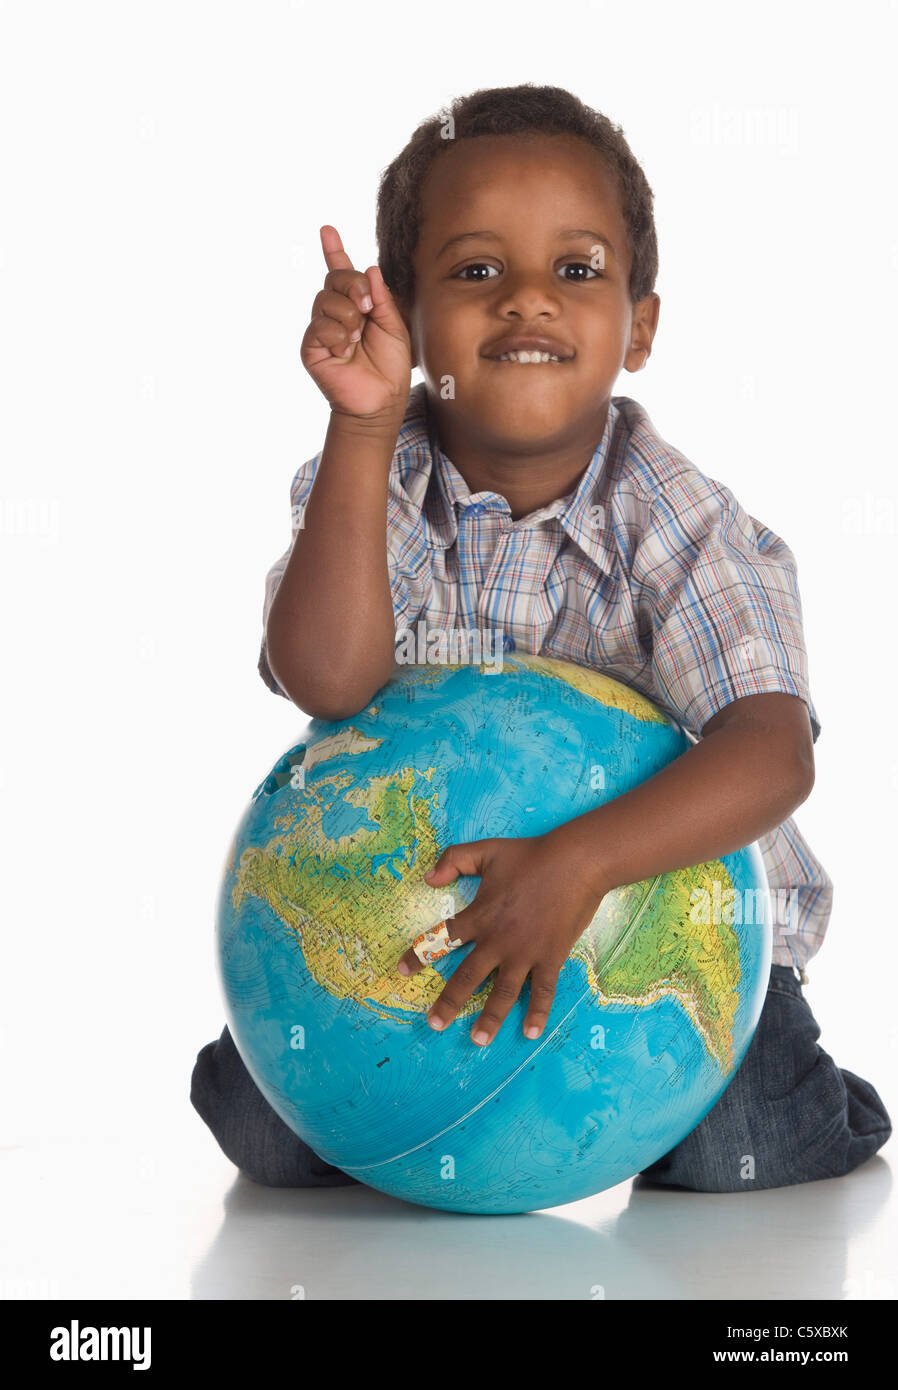 African boy (3-4) holding globe, portrait Banque D'Images